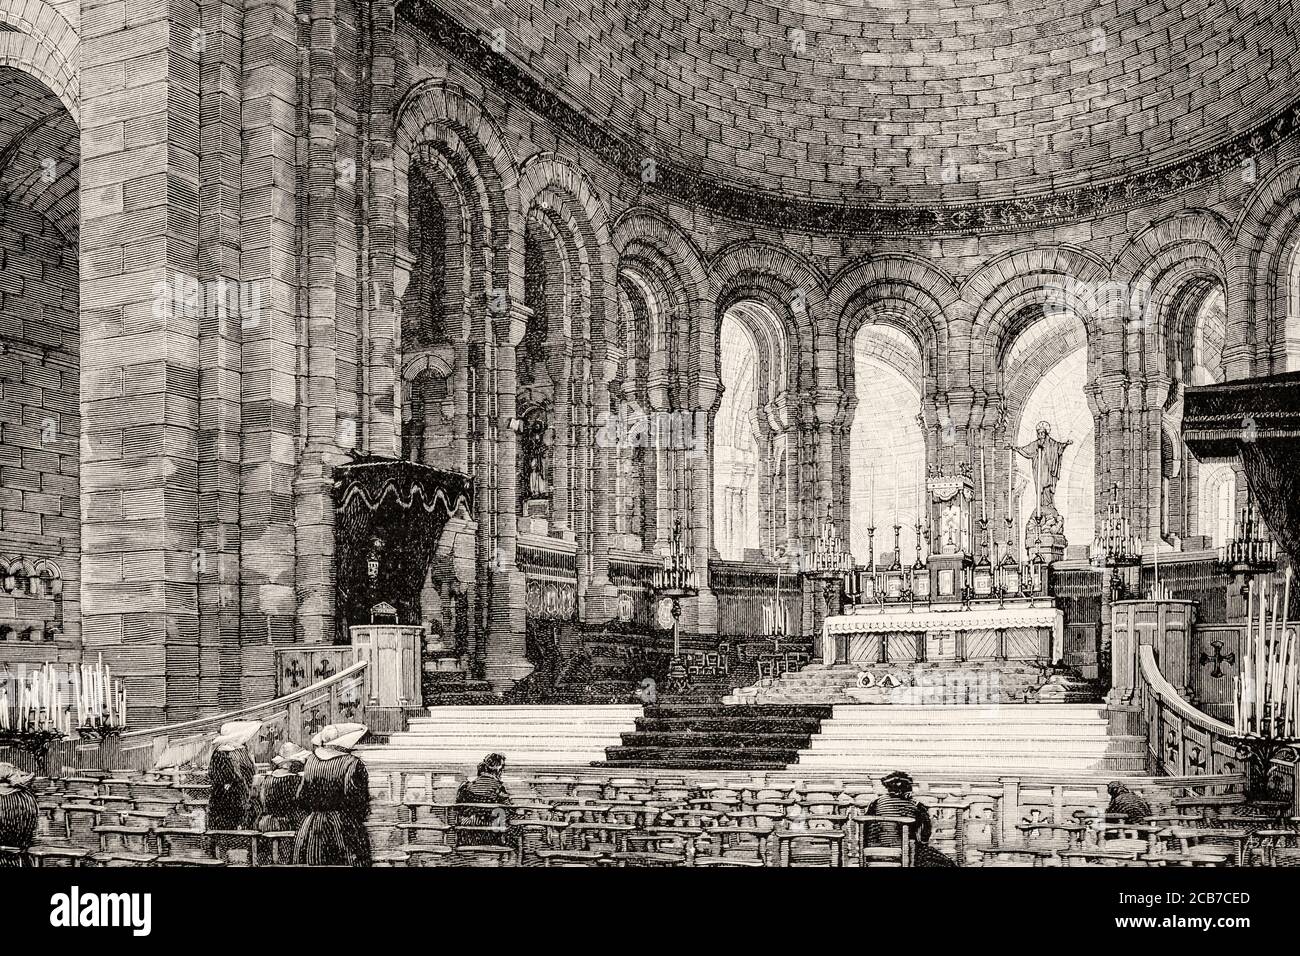 Im Inneren der Basilika Sacre Coeur, Montmartre. Paris, Frankreich. Alte XIX Jahrhundert gravierte Illustration von La Ilustracion Española y Americana 1894 Stockfoto